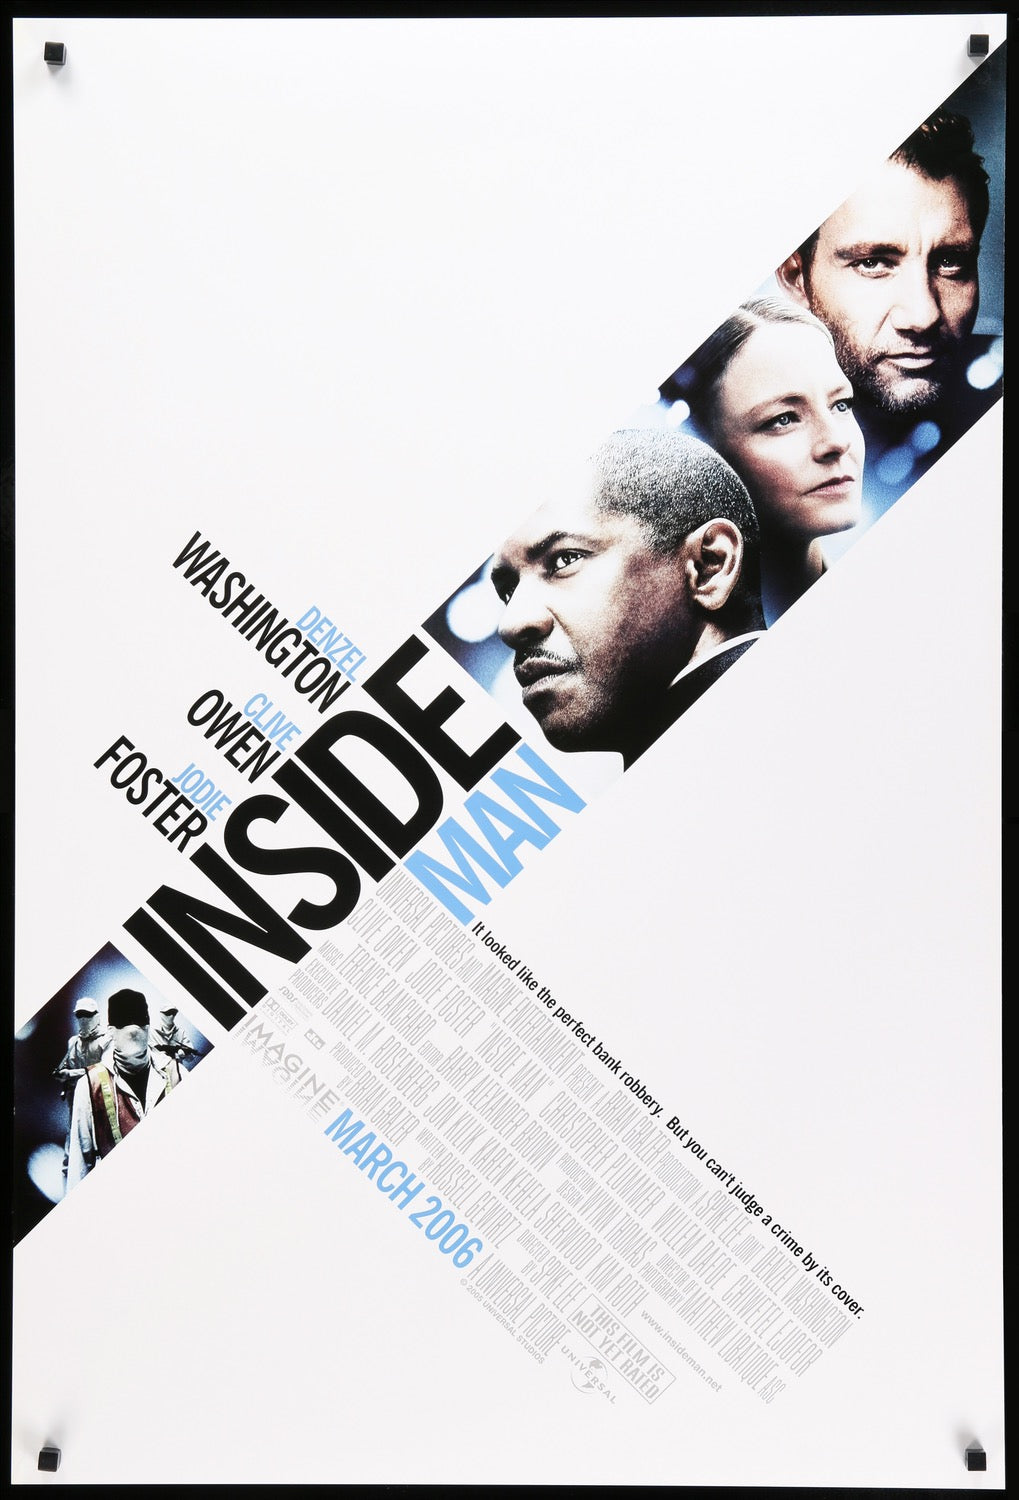 Inside Man (2006) original movie poster for sale at Original Film Art